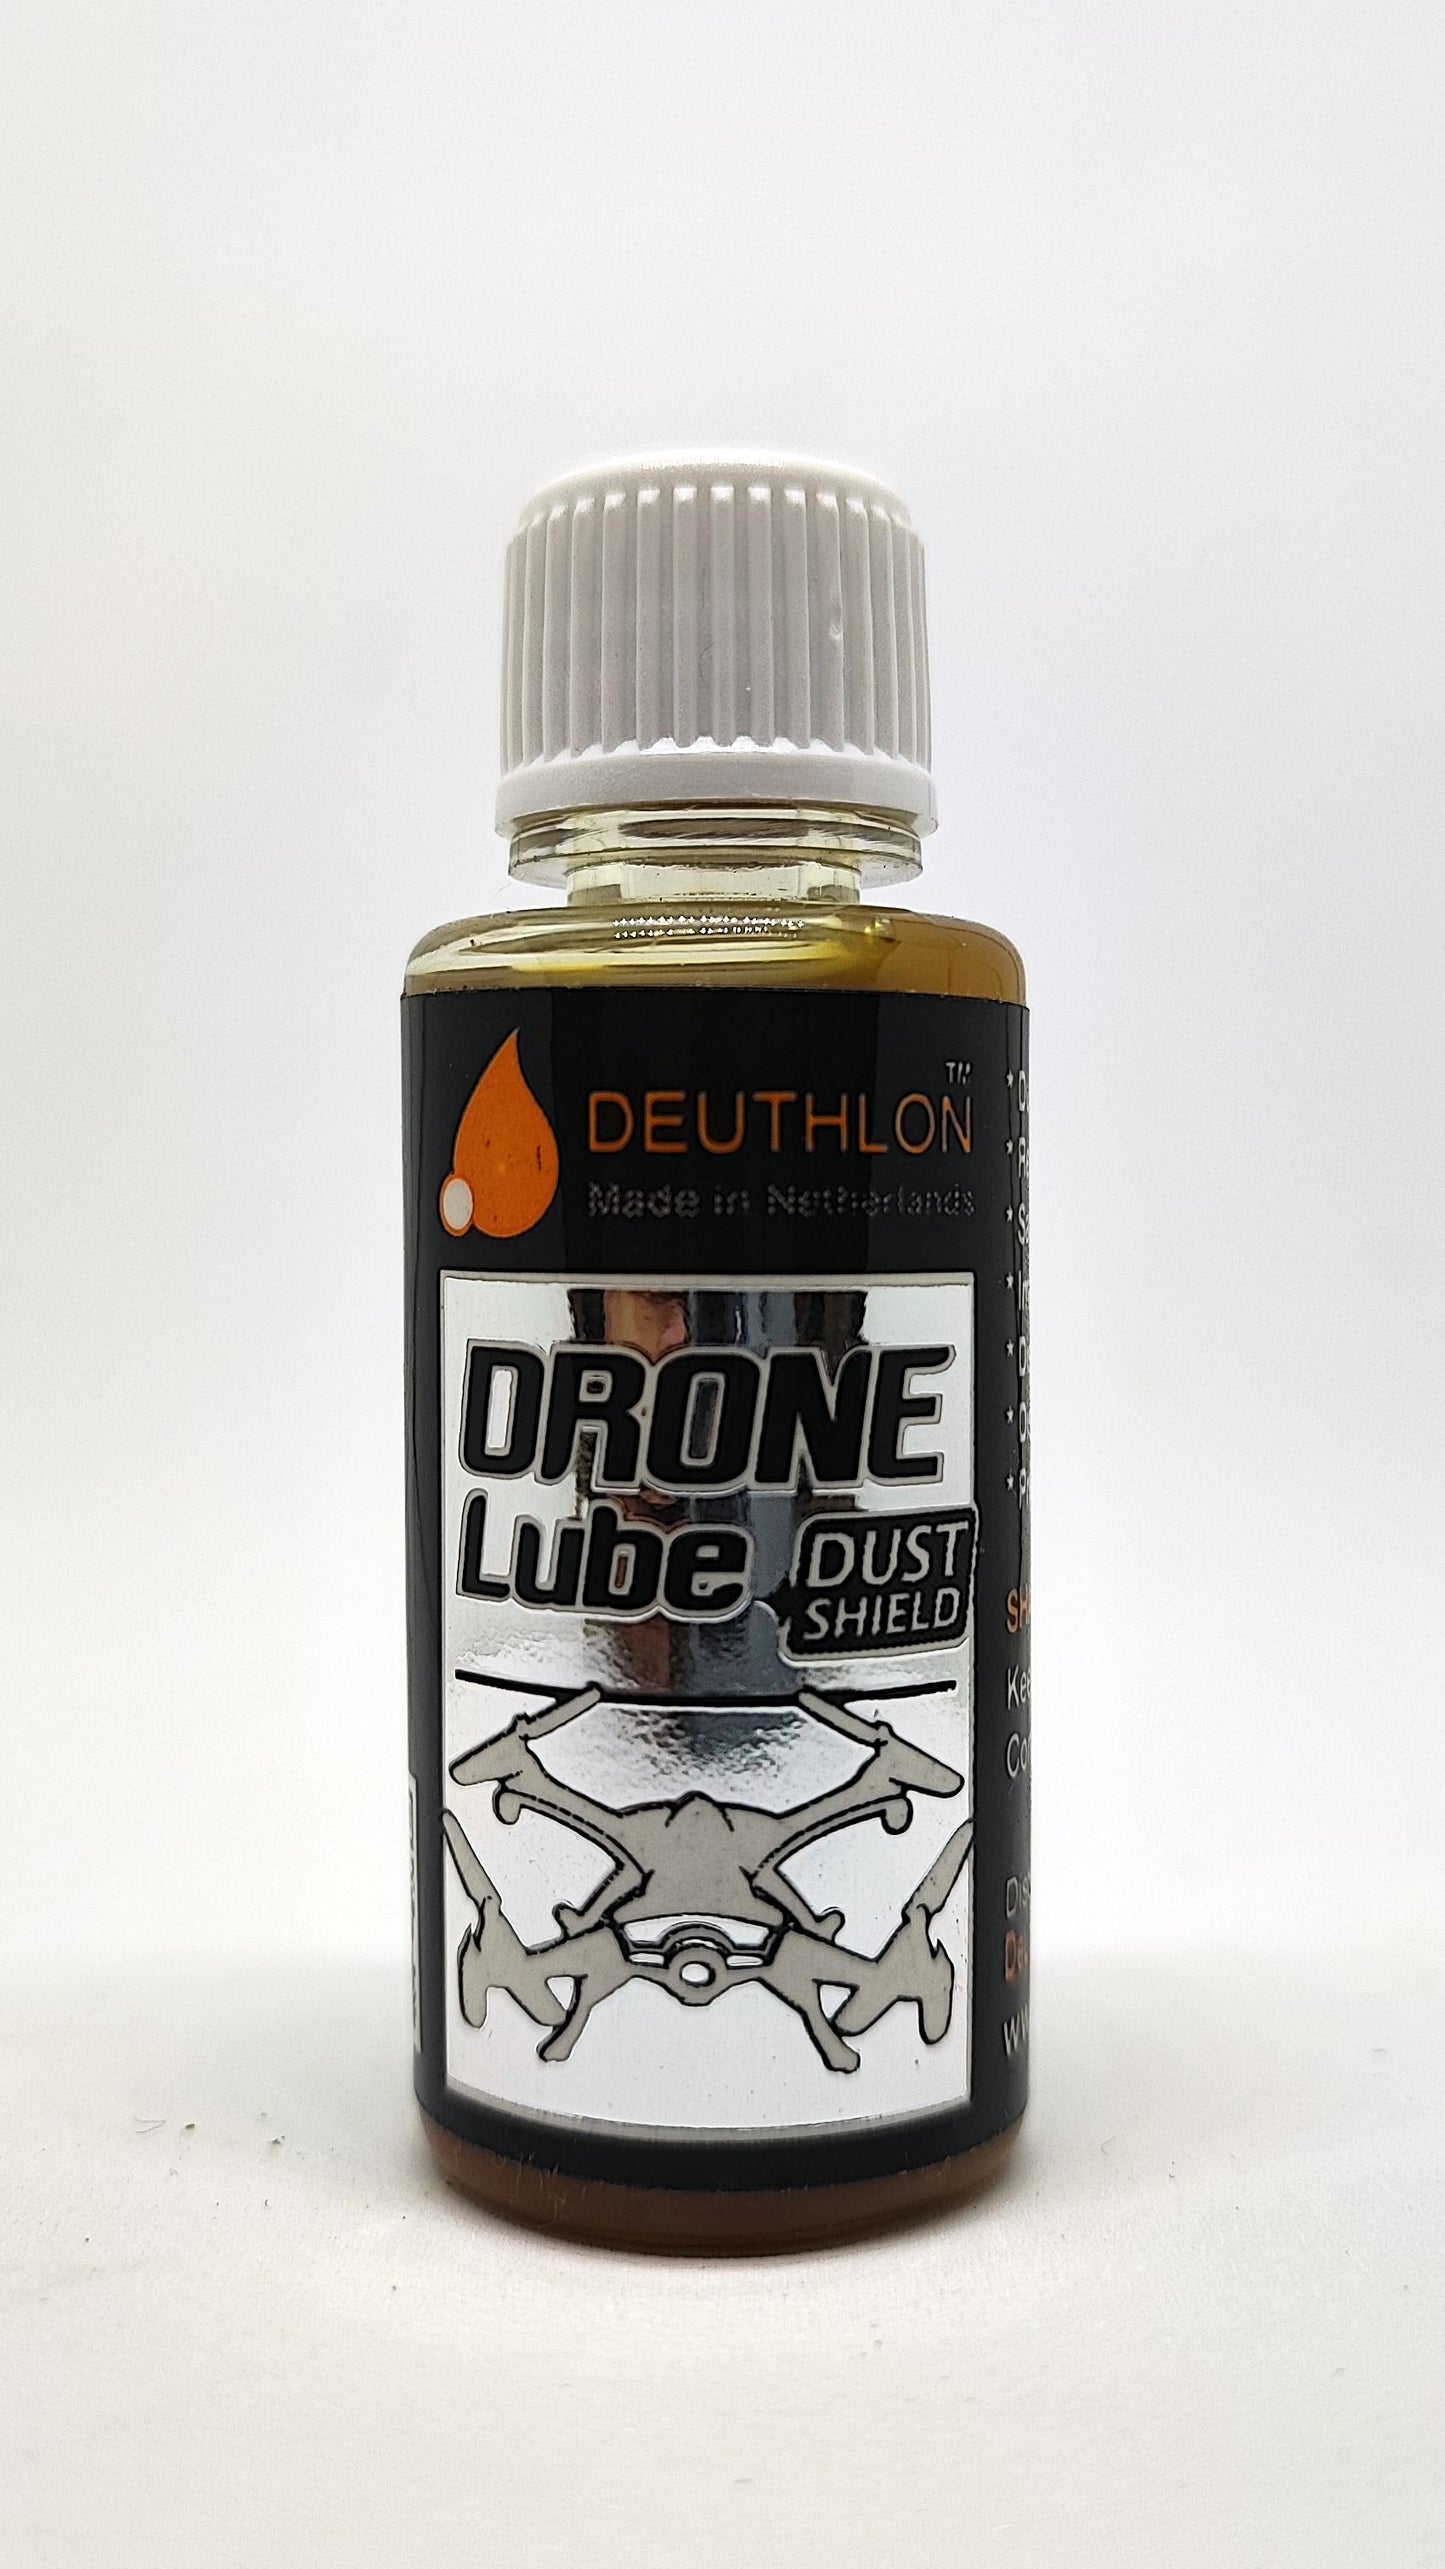 Drone Lube | Better enjoyment with maximum performance - Deuthlon